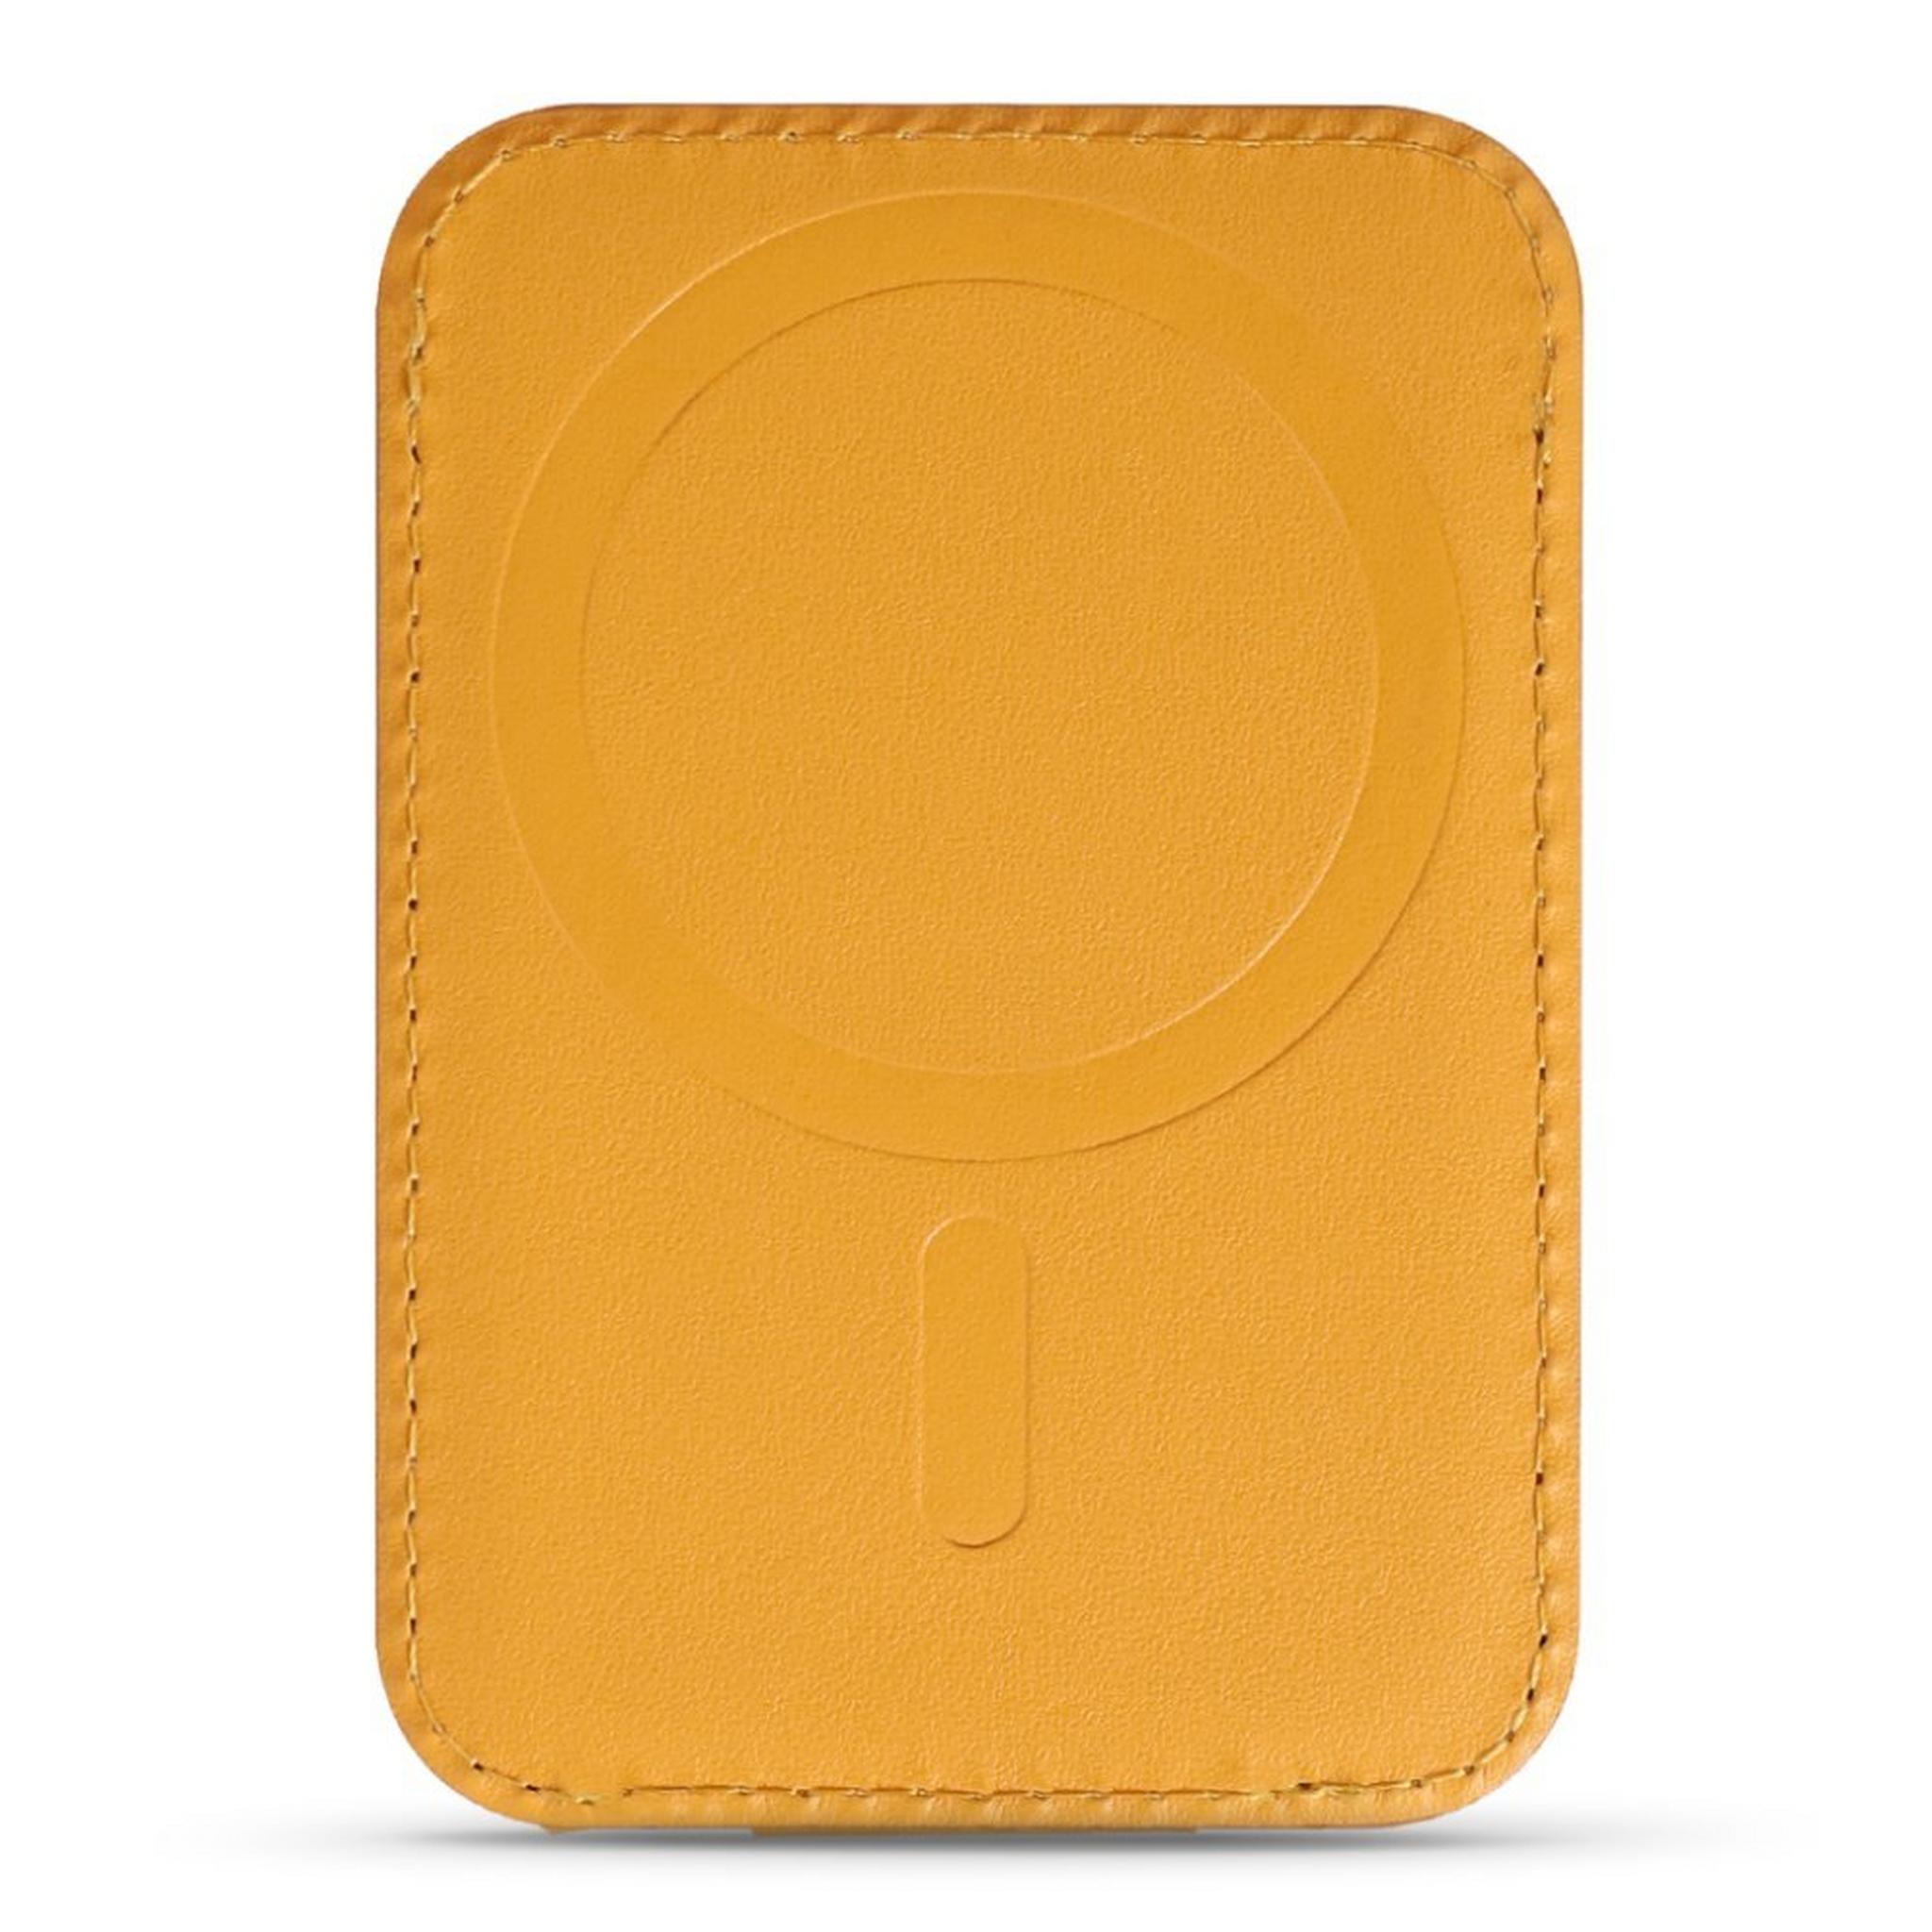 Hyphen MagSafe Wallet - Card Holder with Stand | Orange